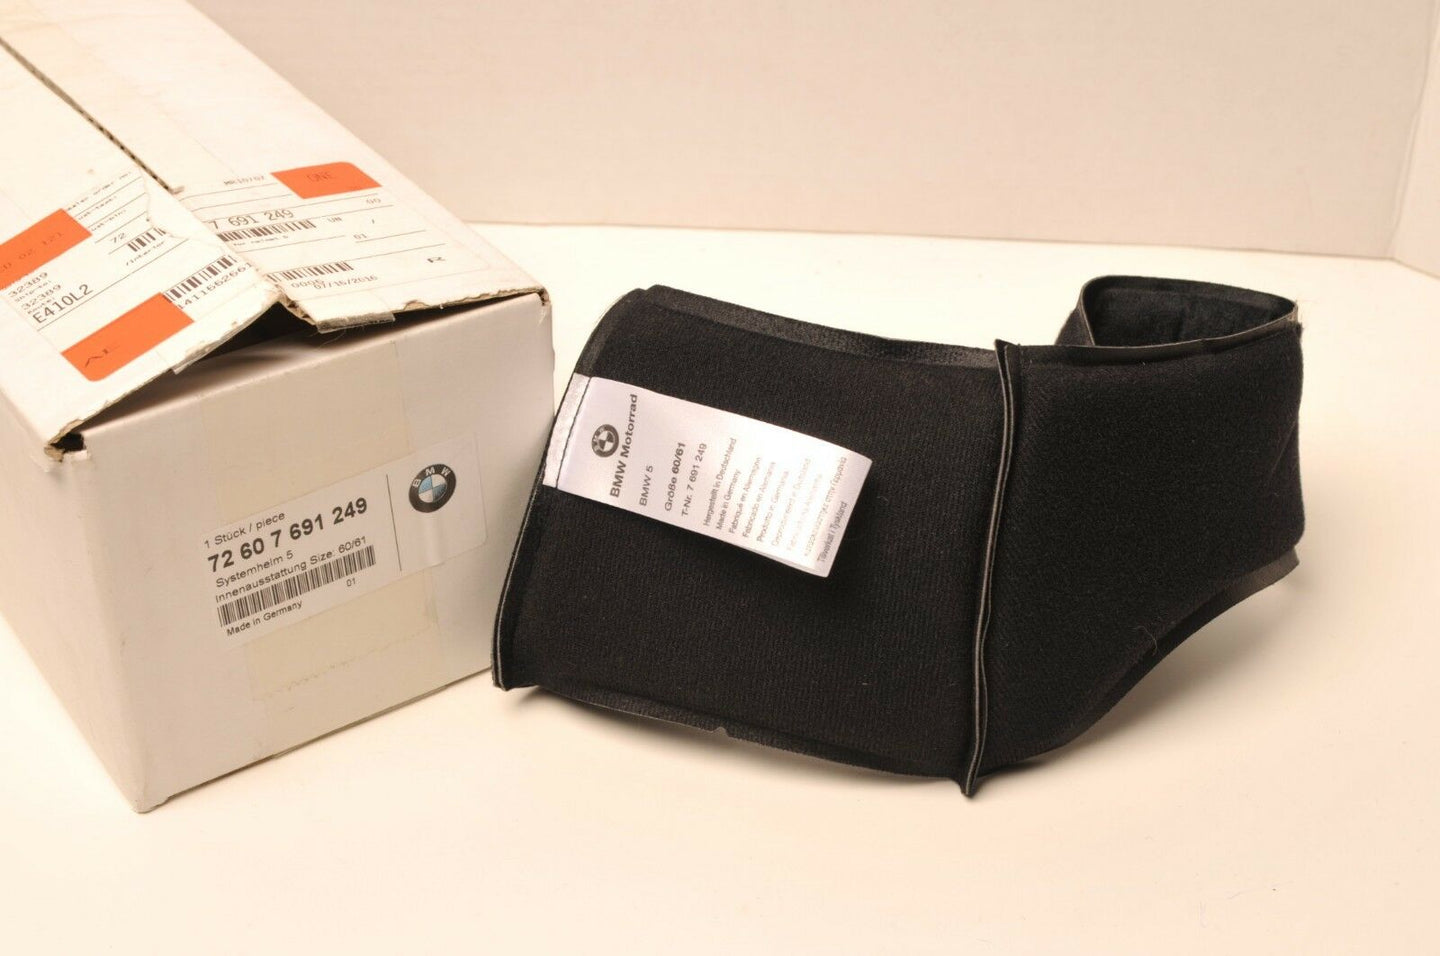 GENUINE BMW 72607691249 Interior Lining for Helmet 5